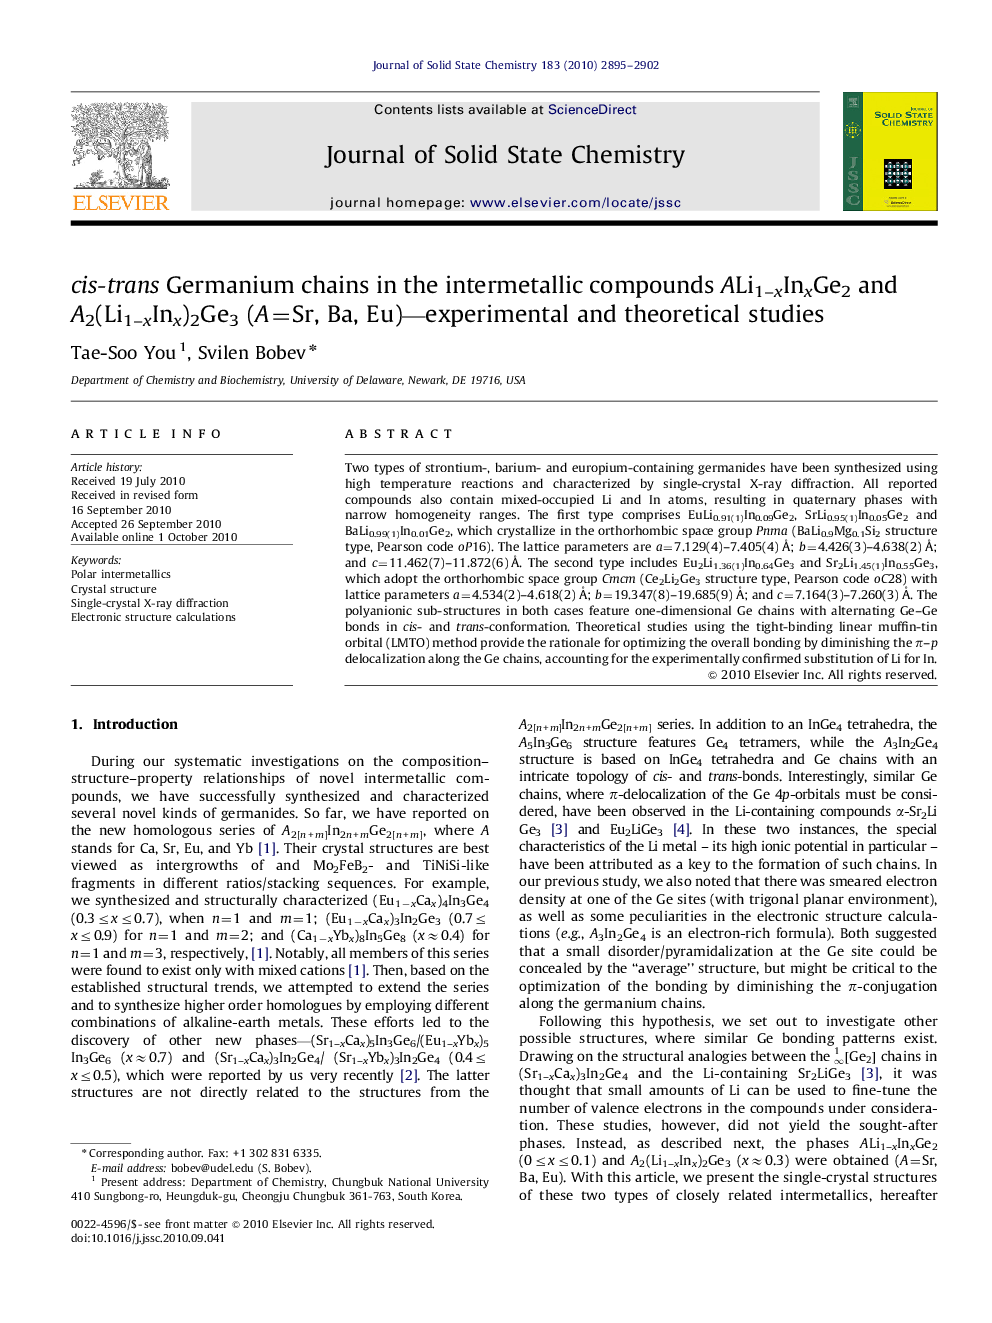 cis-trans Germanium chains in the intermetallic compounds ALi1–xInxGe2 and A2(Li1–xInx)2Ge3 (A=Sr, Ba, Eu)—experimental and theoreticalstudies